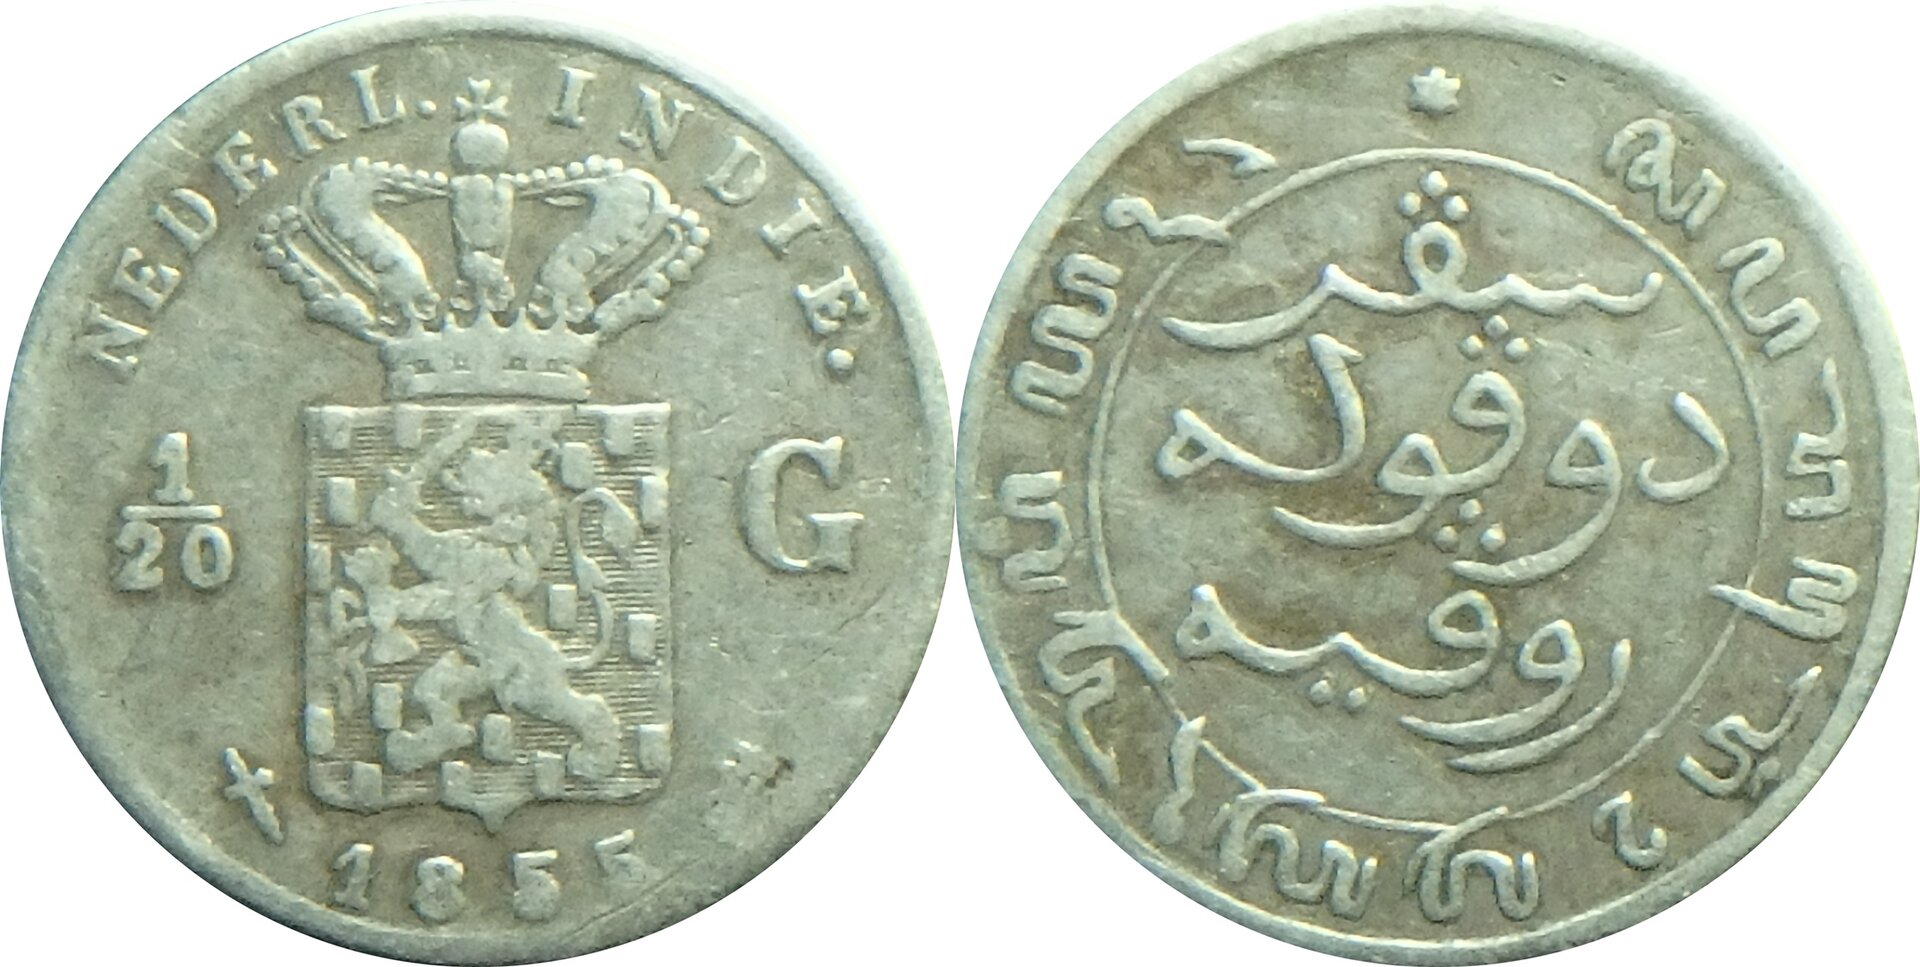 1855 NL-NI 1-20 g.jpg